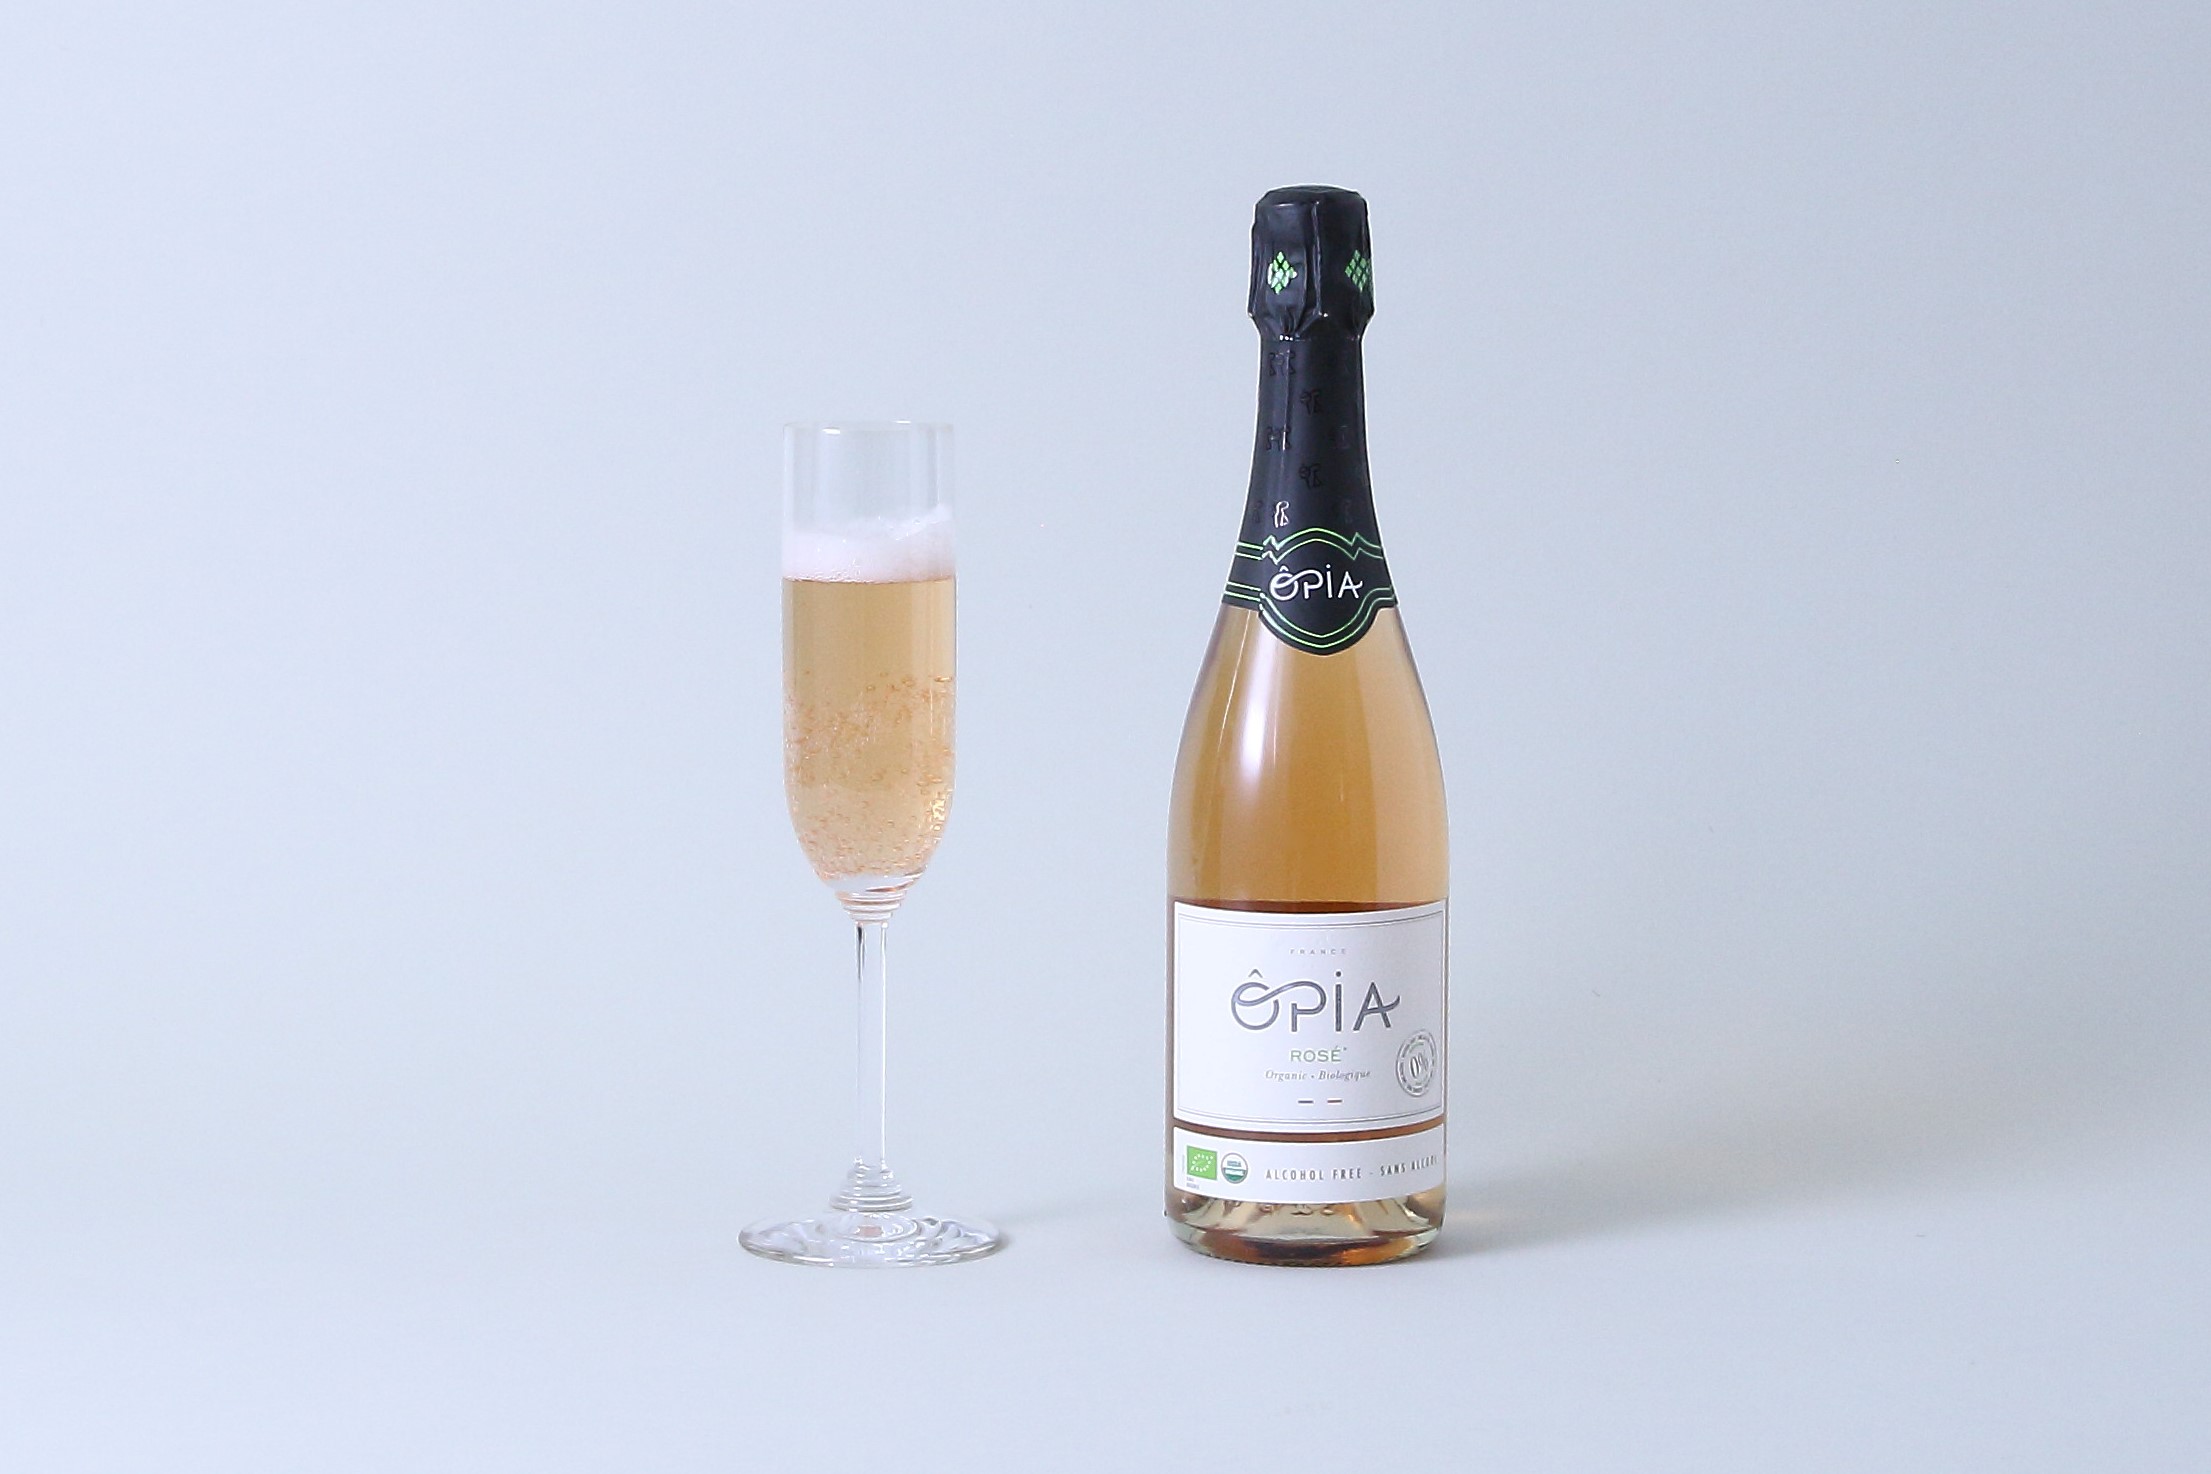 OPIA オーガニックノンアルコールワイン ロゼスパークリング